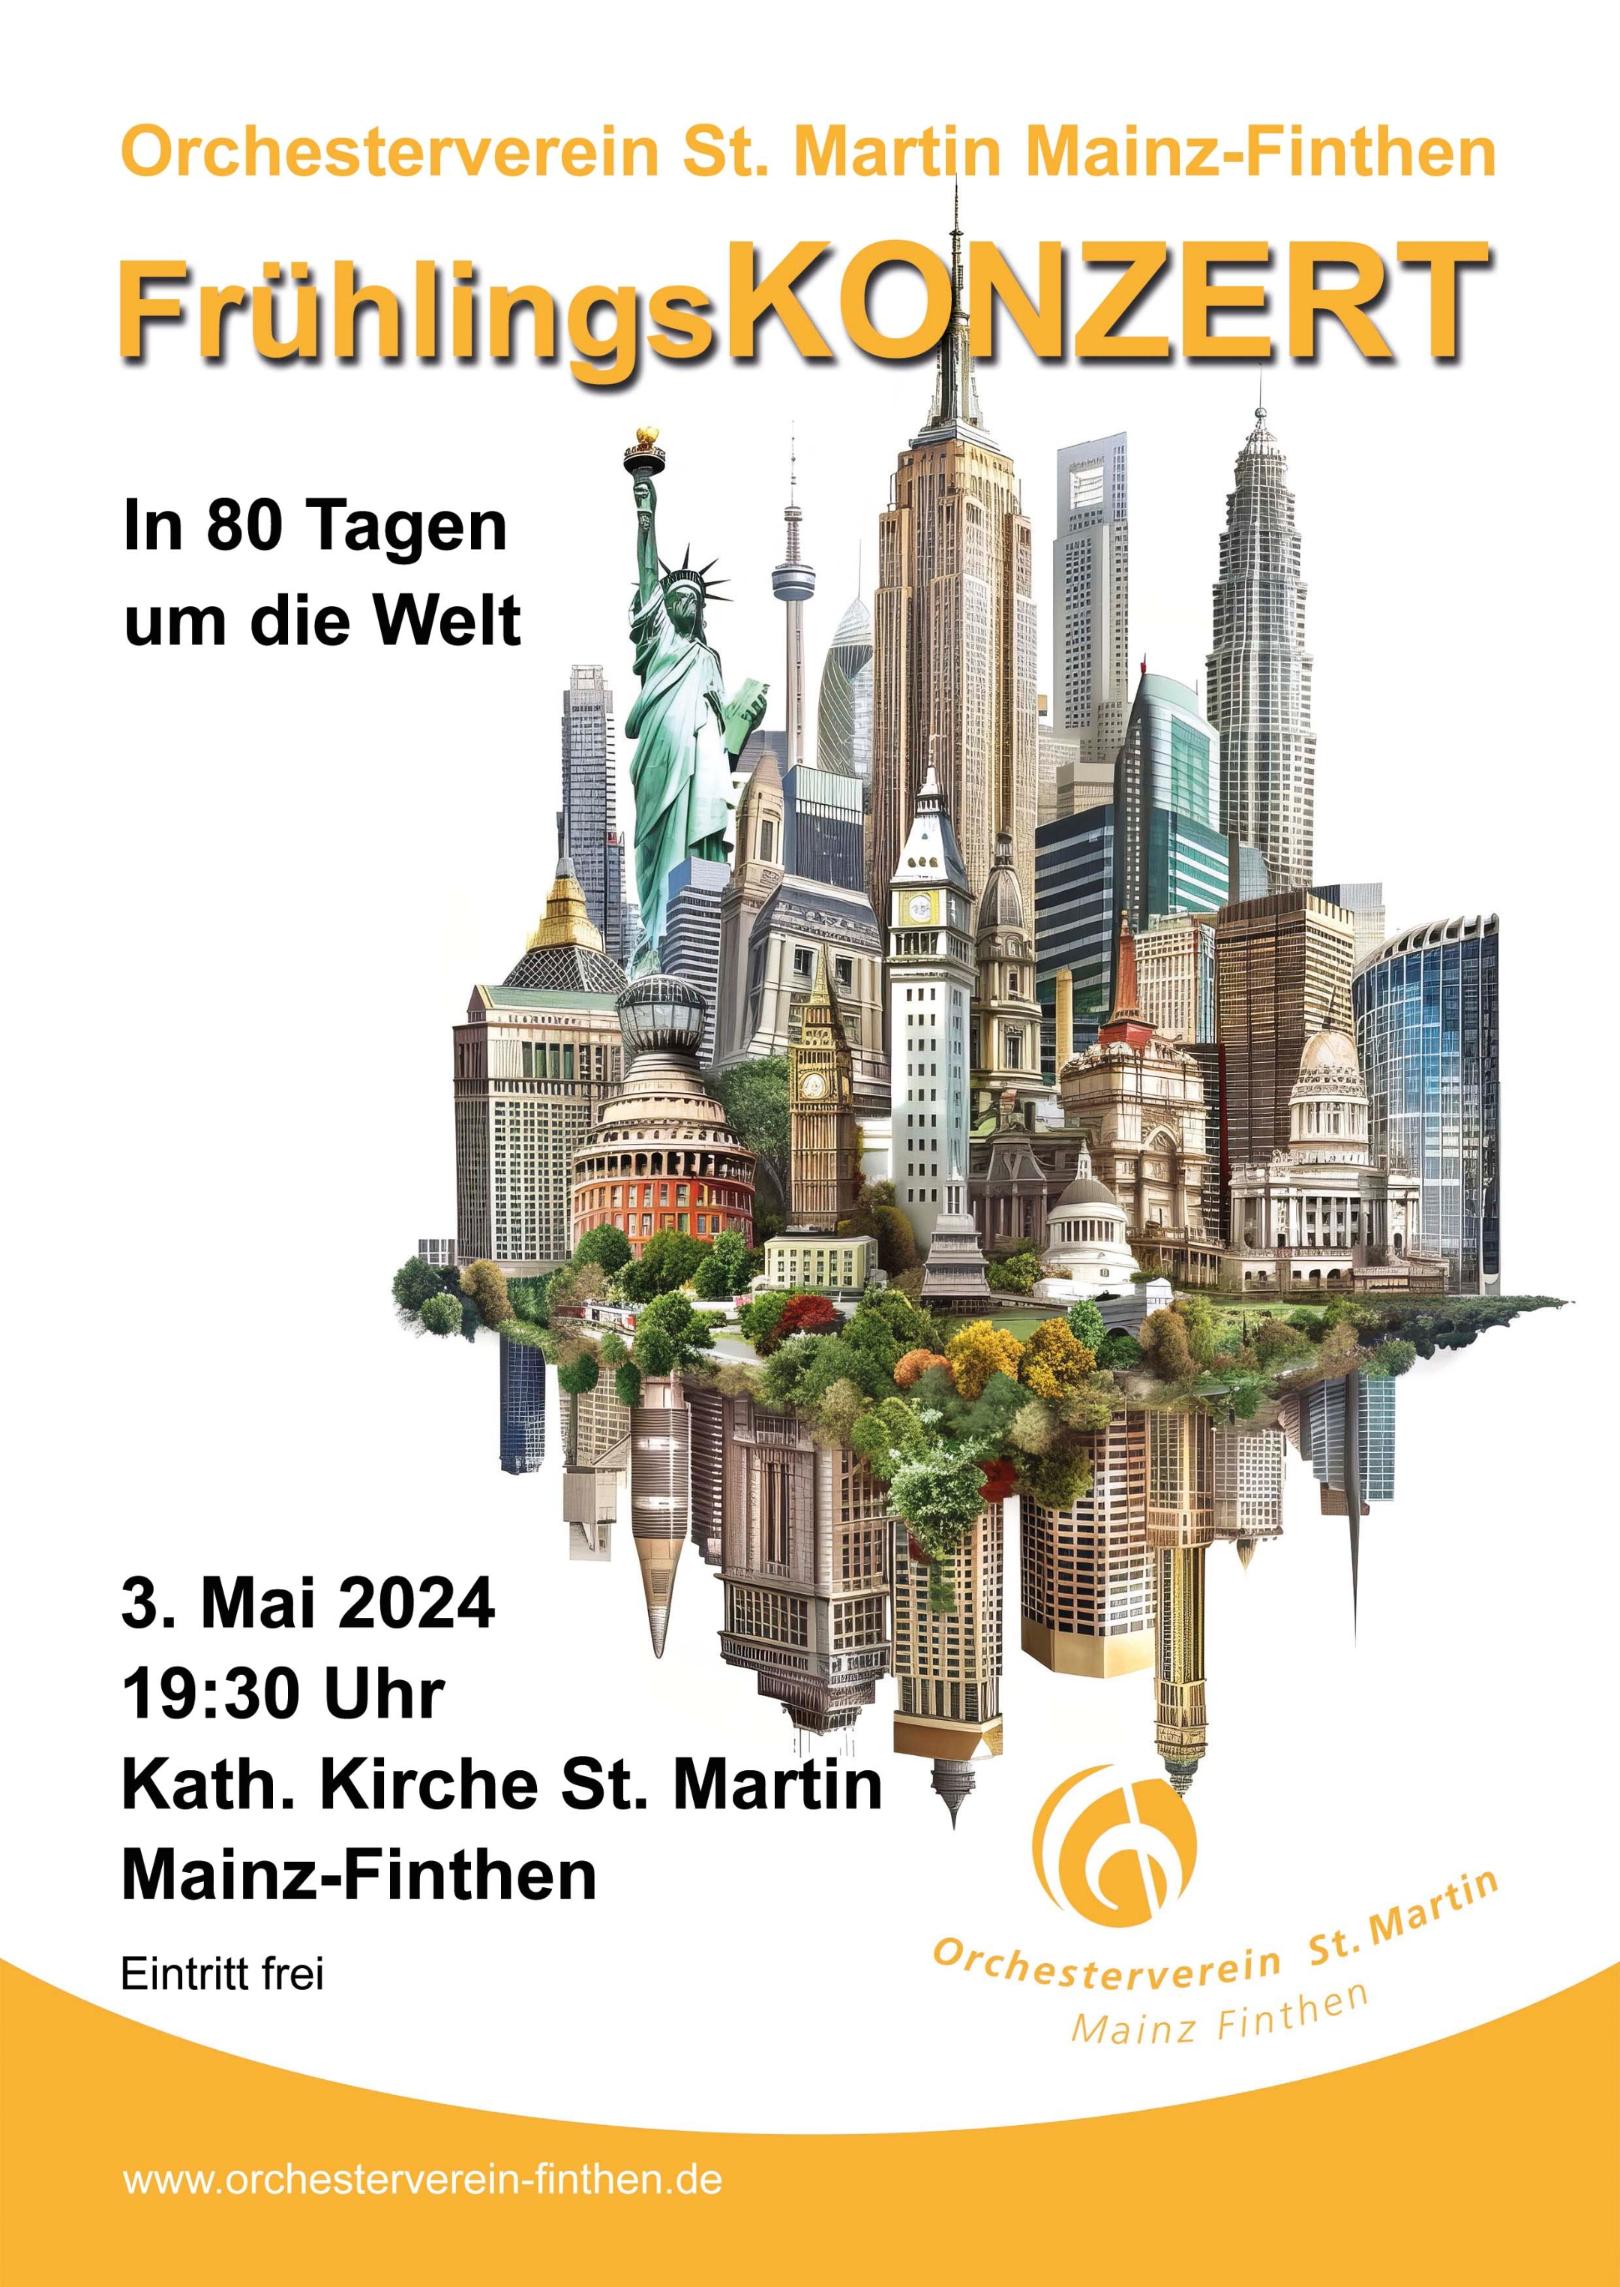 Konzertplakat Frühjahrskonzert 2024 (c) Orchesterverein St. Martin